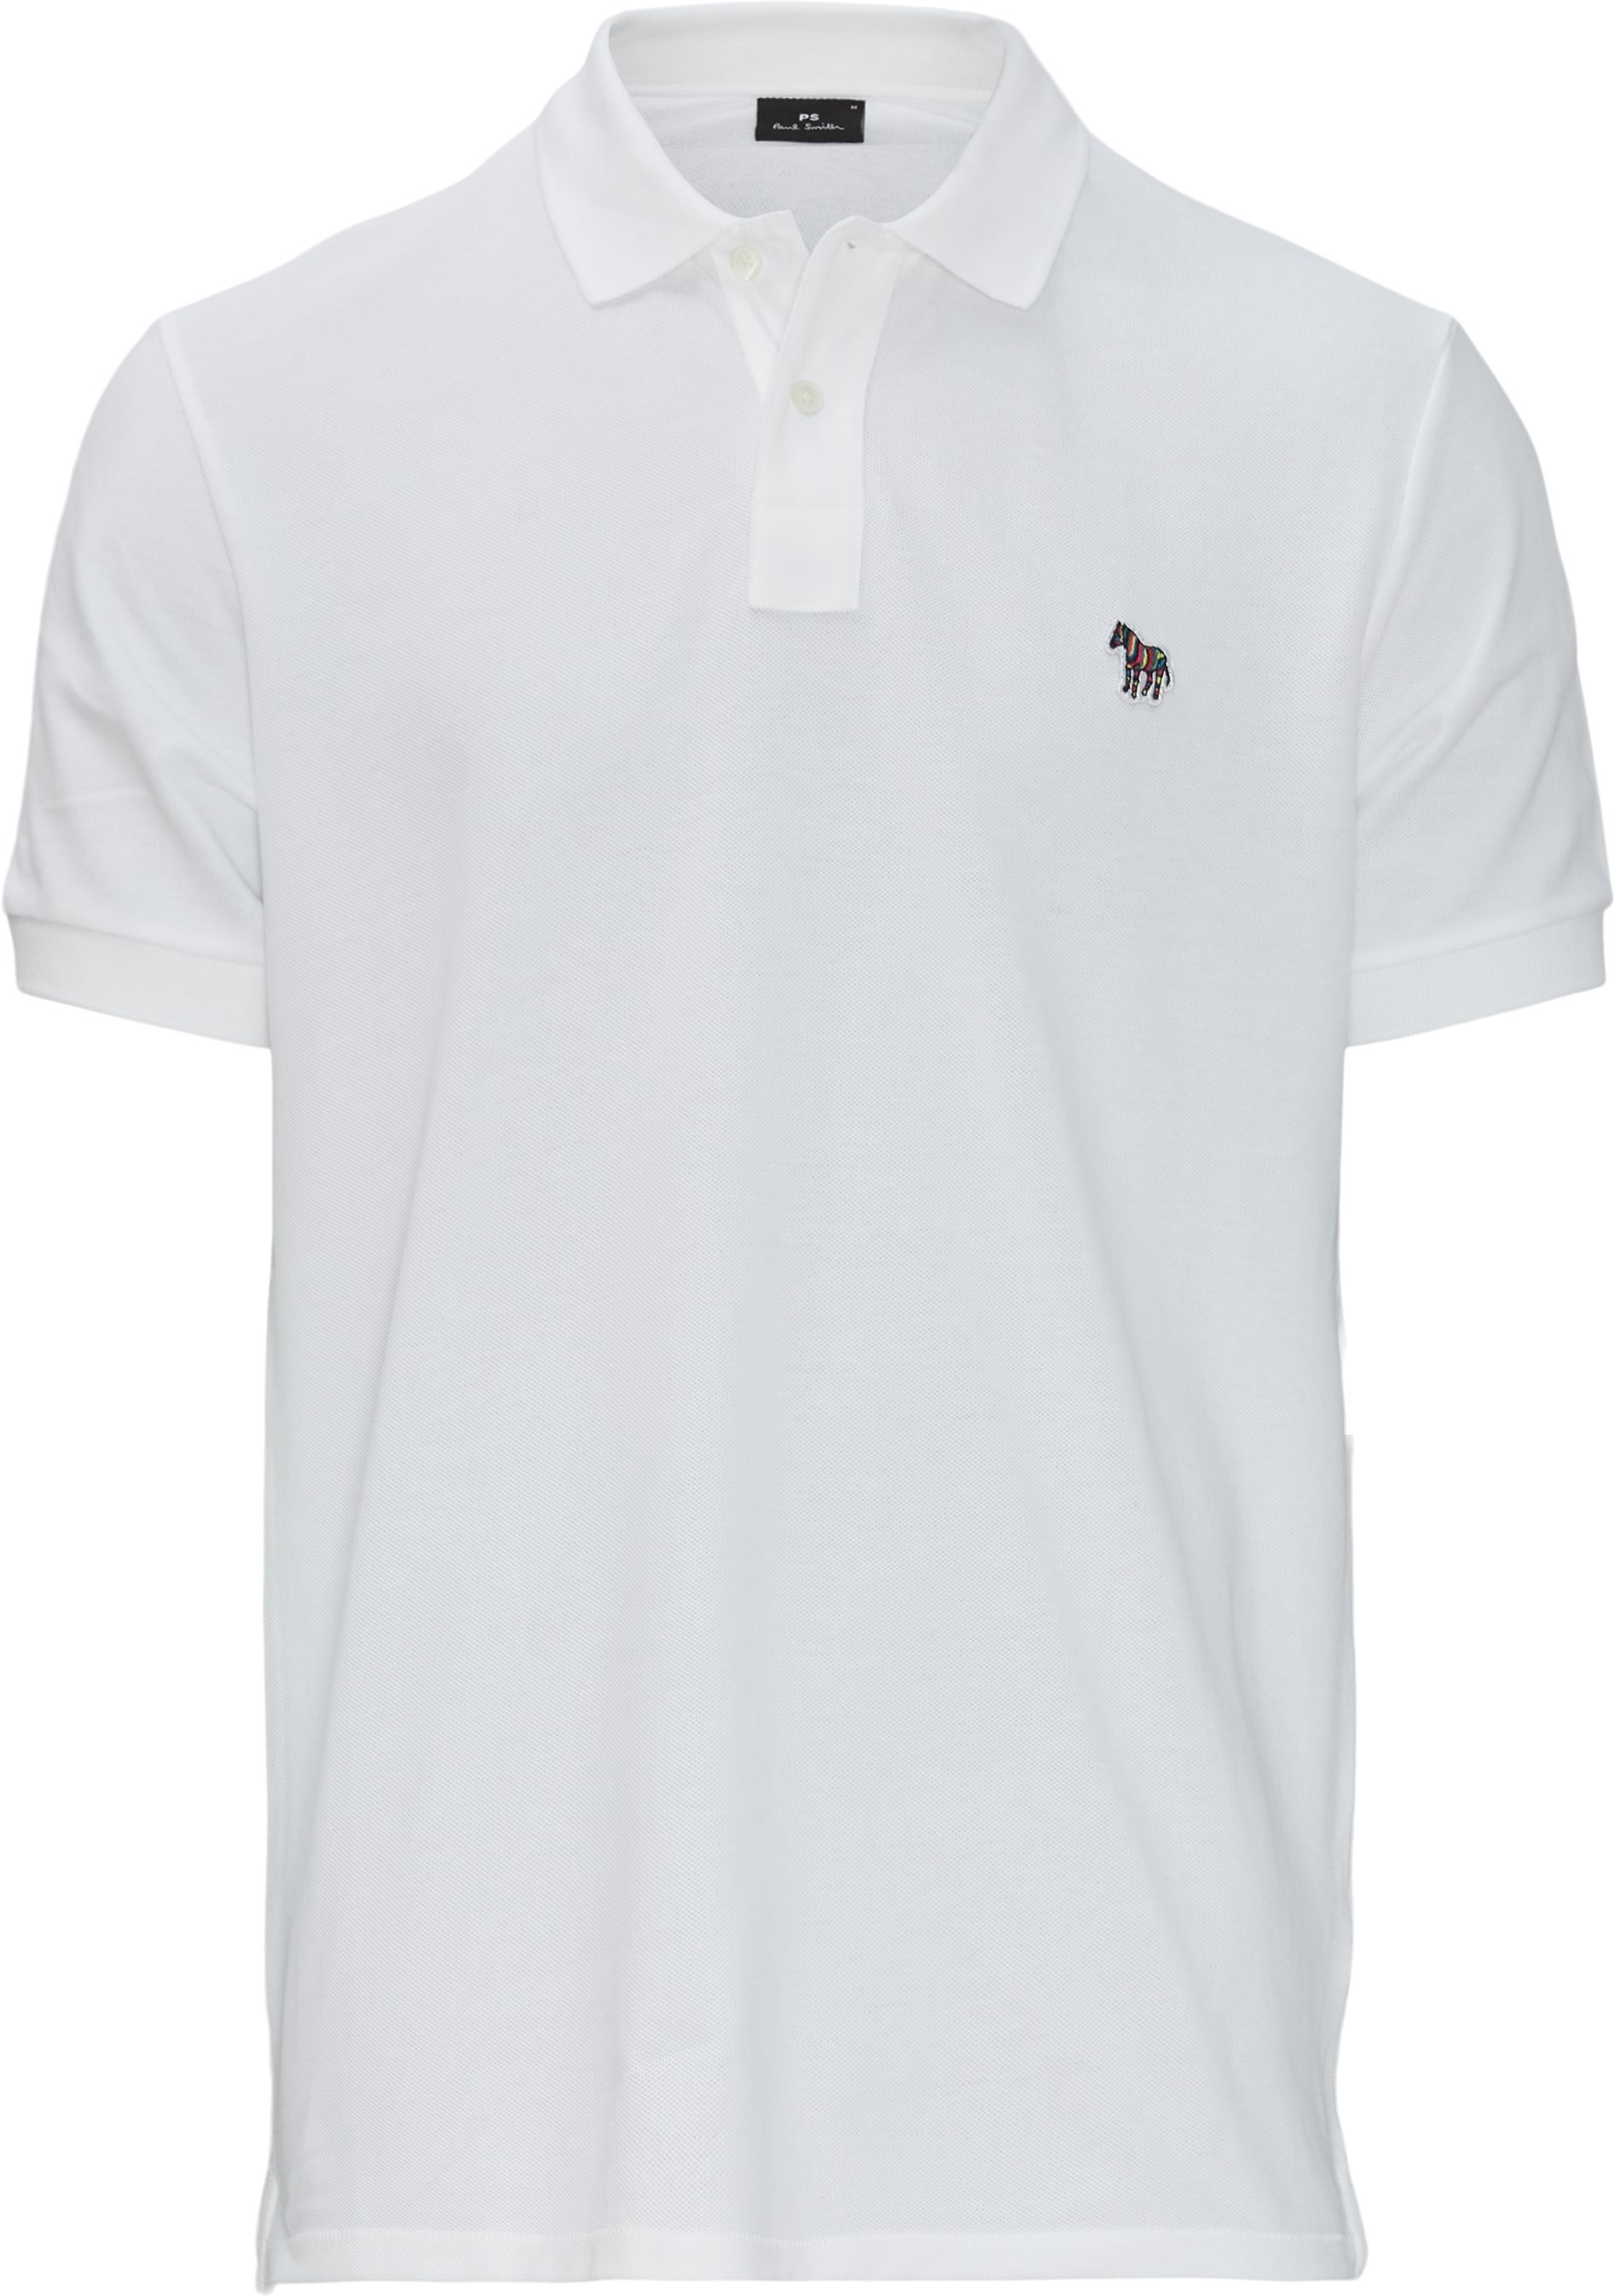 Polo T-shirt - T-shirts - Regular fit - White